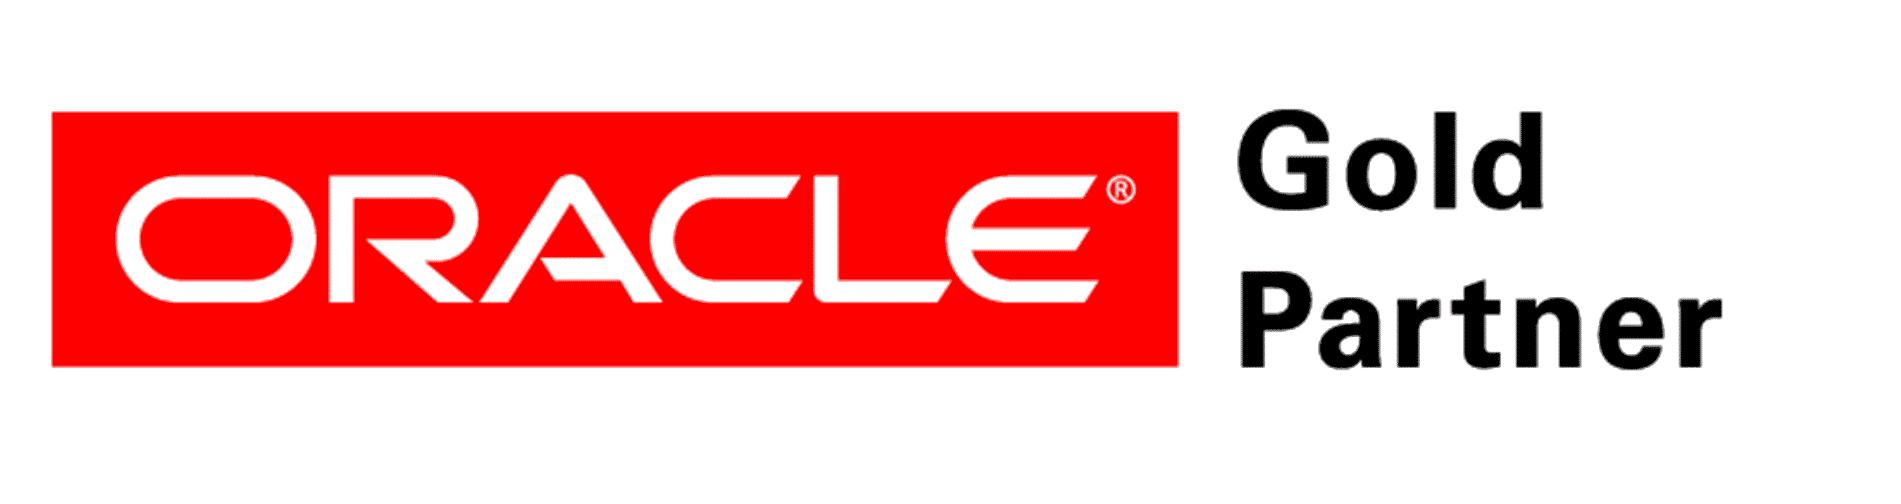 Oracle Gold Partner Logo - Video Job Description